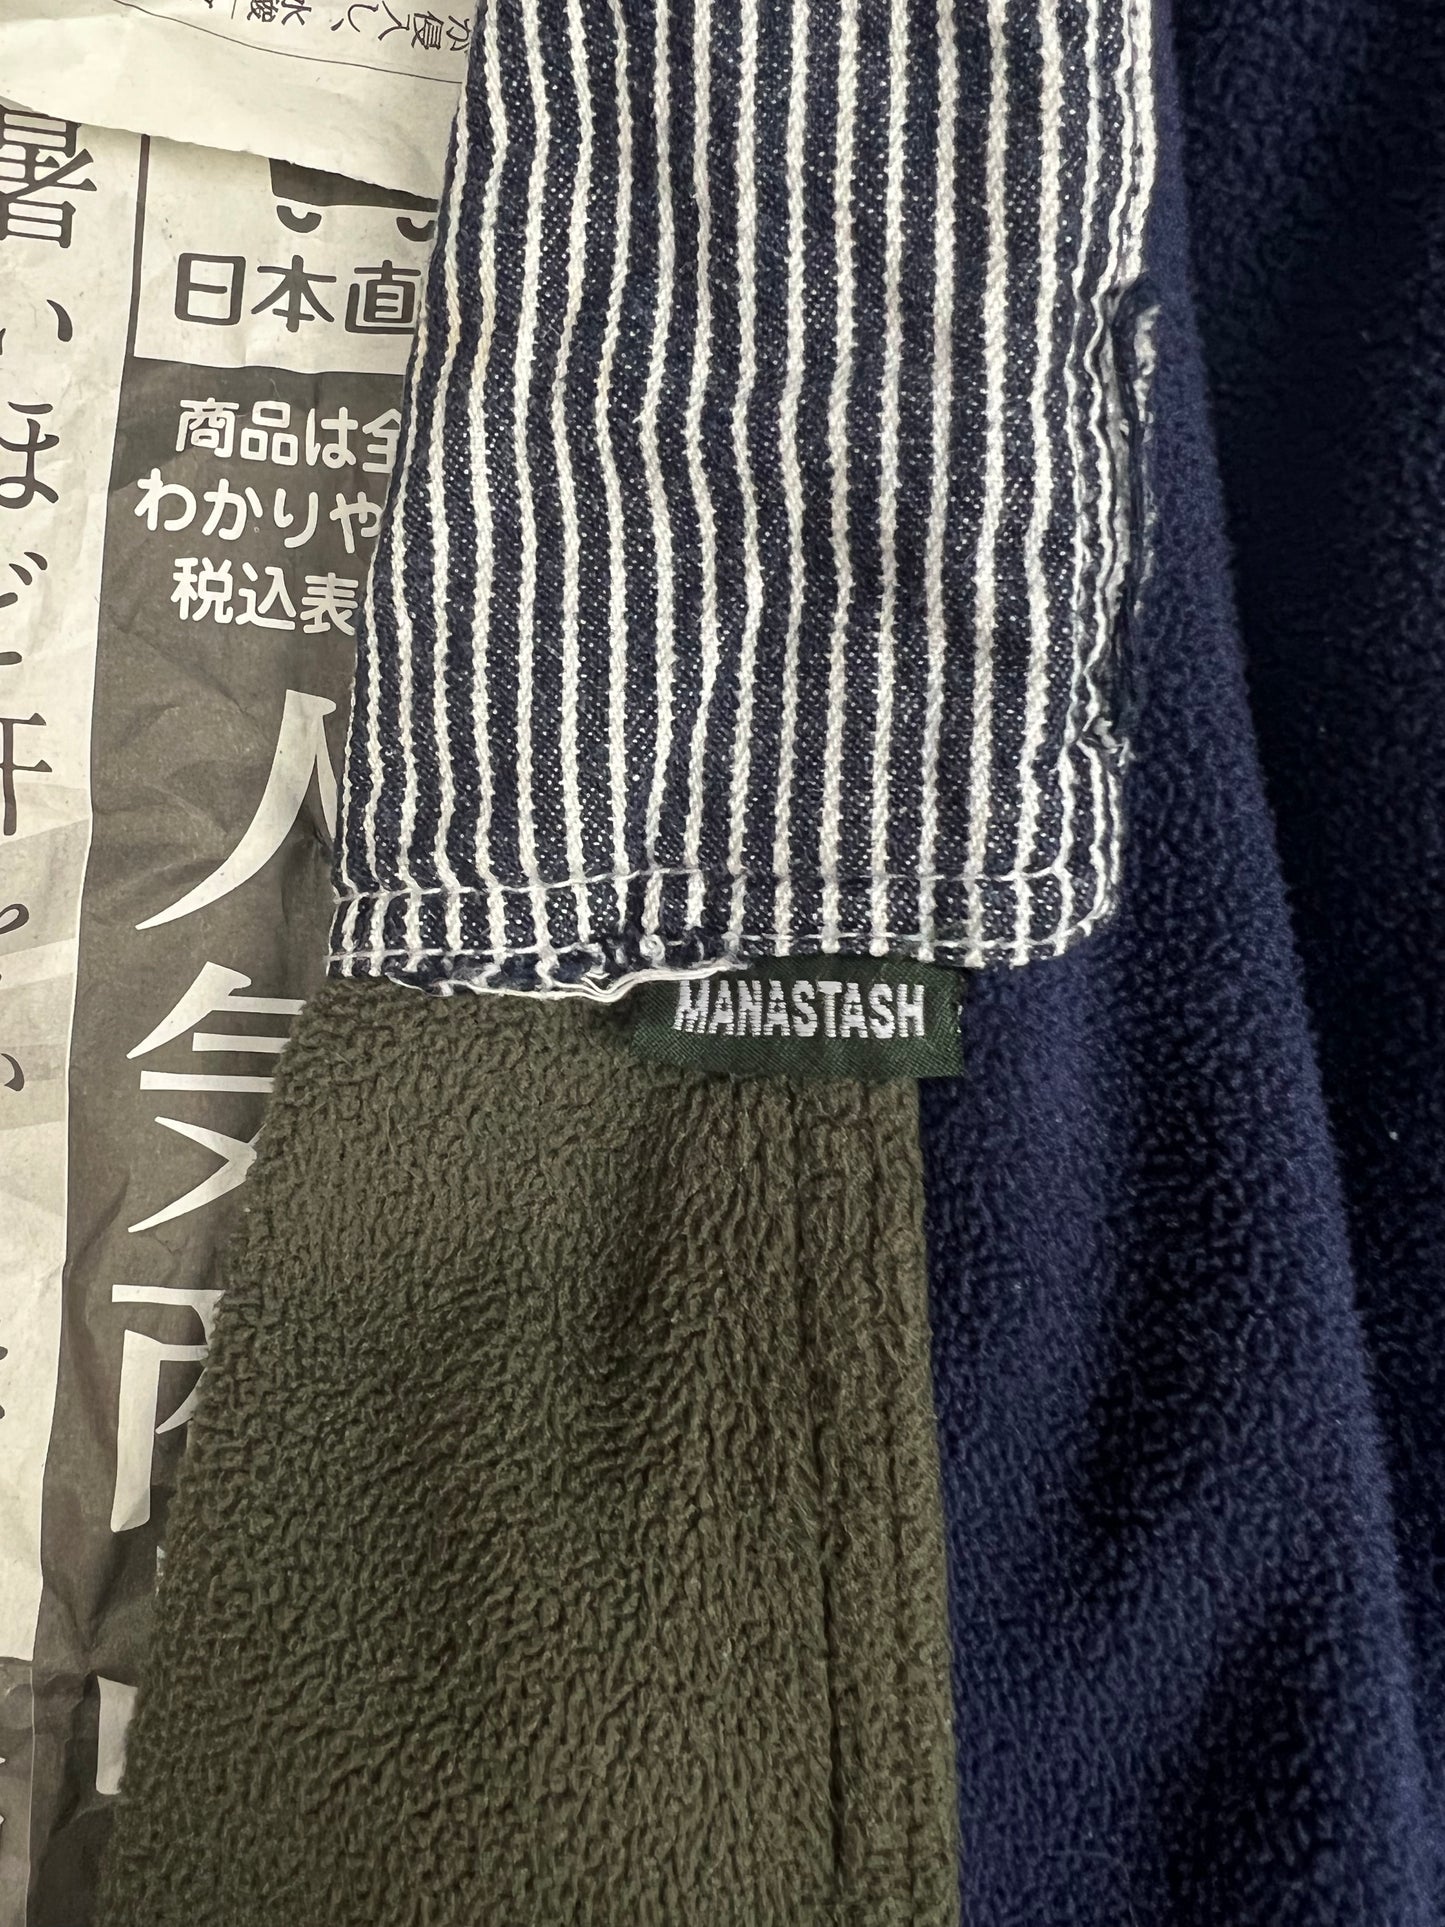 [S/M]Multi-Fabric Fleece Pants